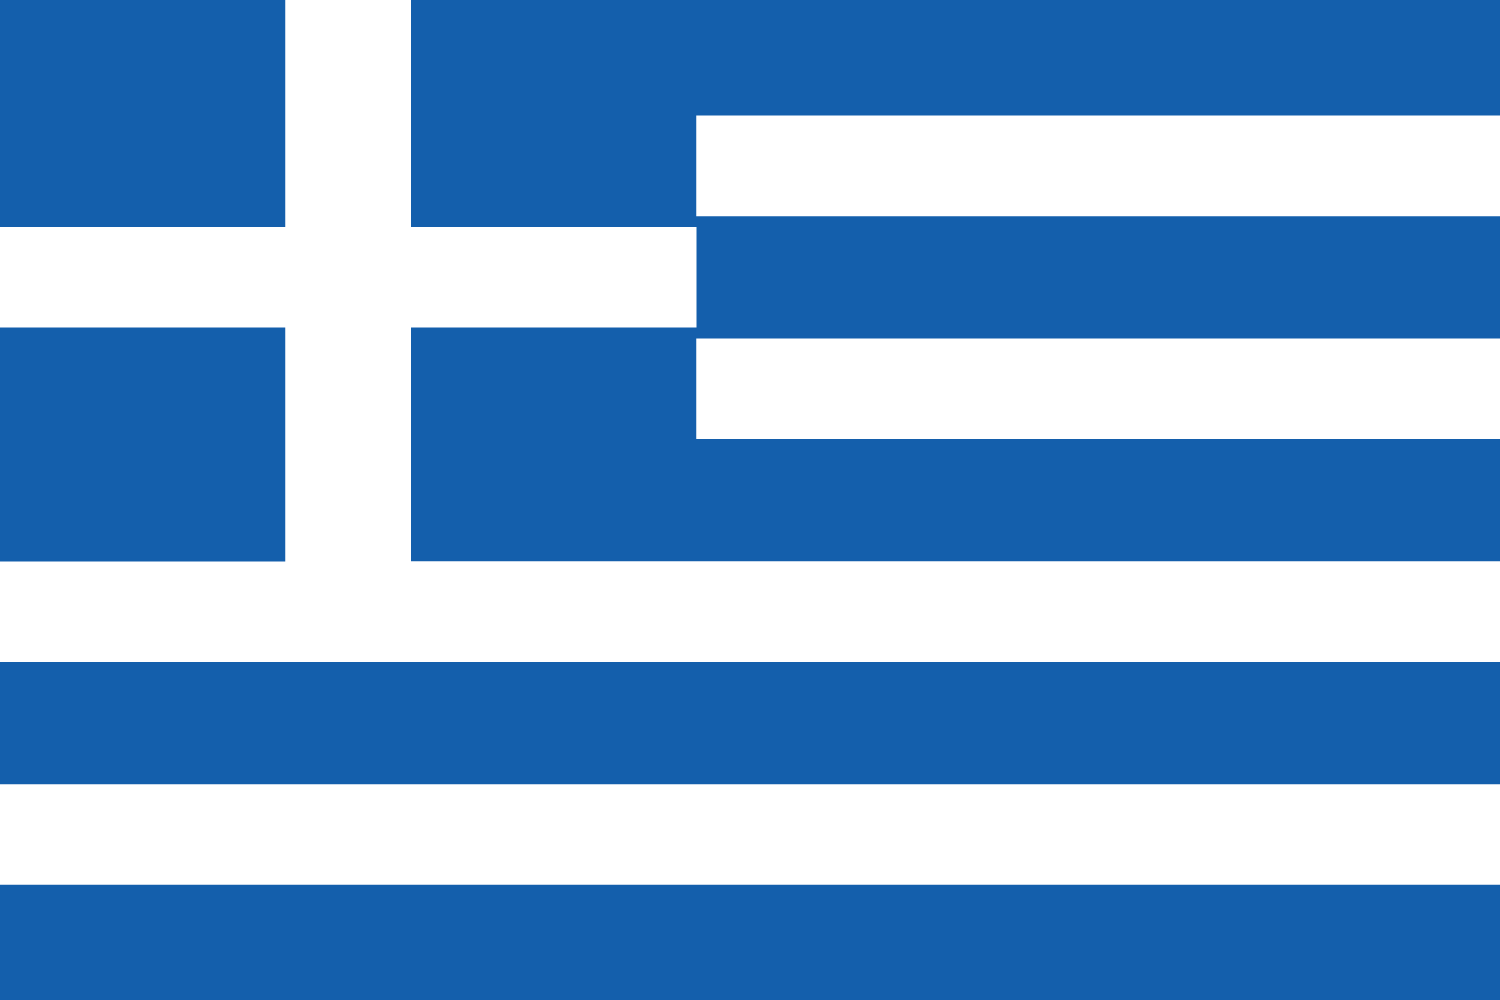 2.4. GREECE